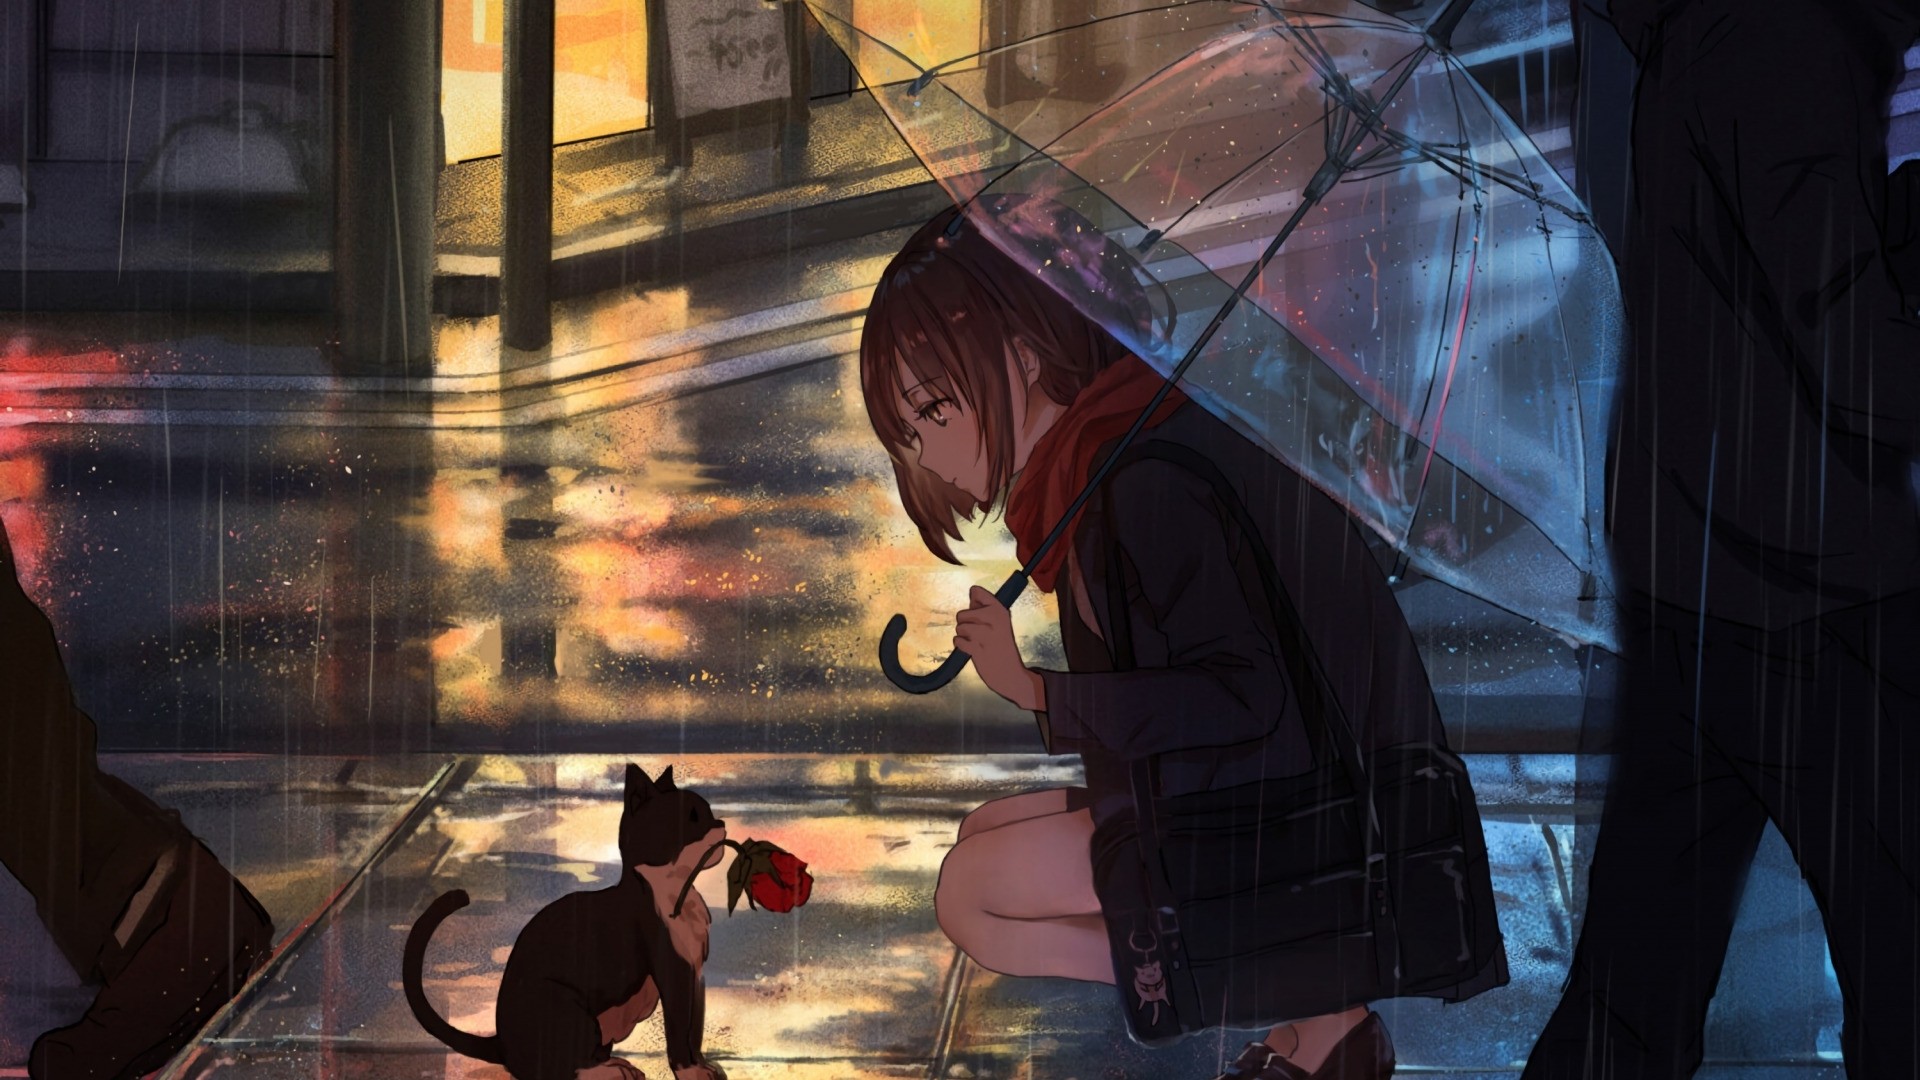 Digital Art of an Anime Girl Crying in the Rain - Etsy